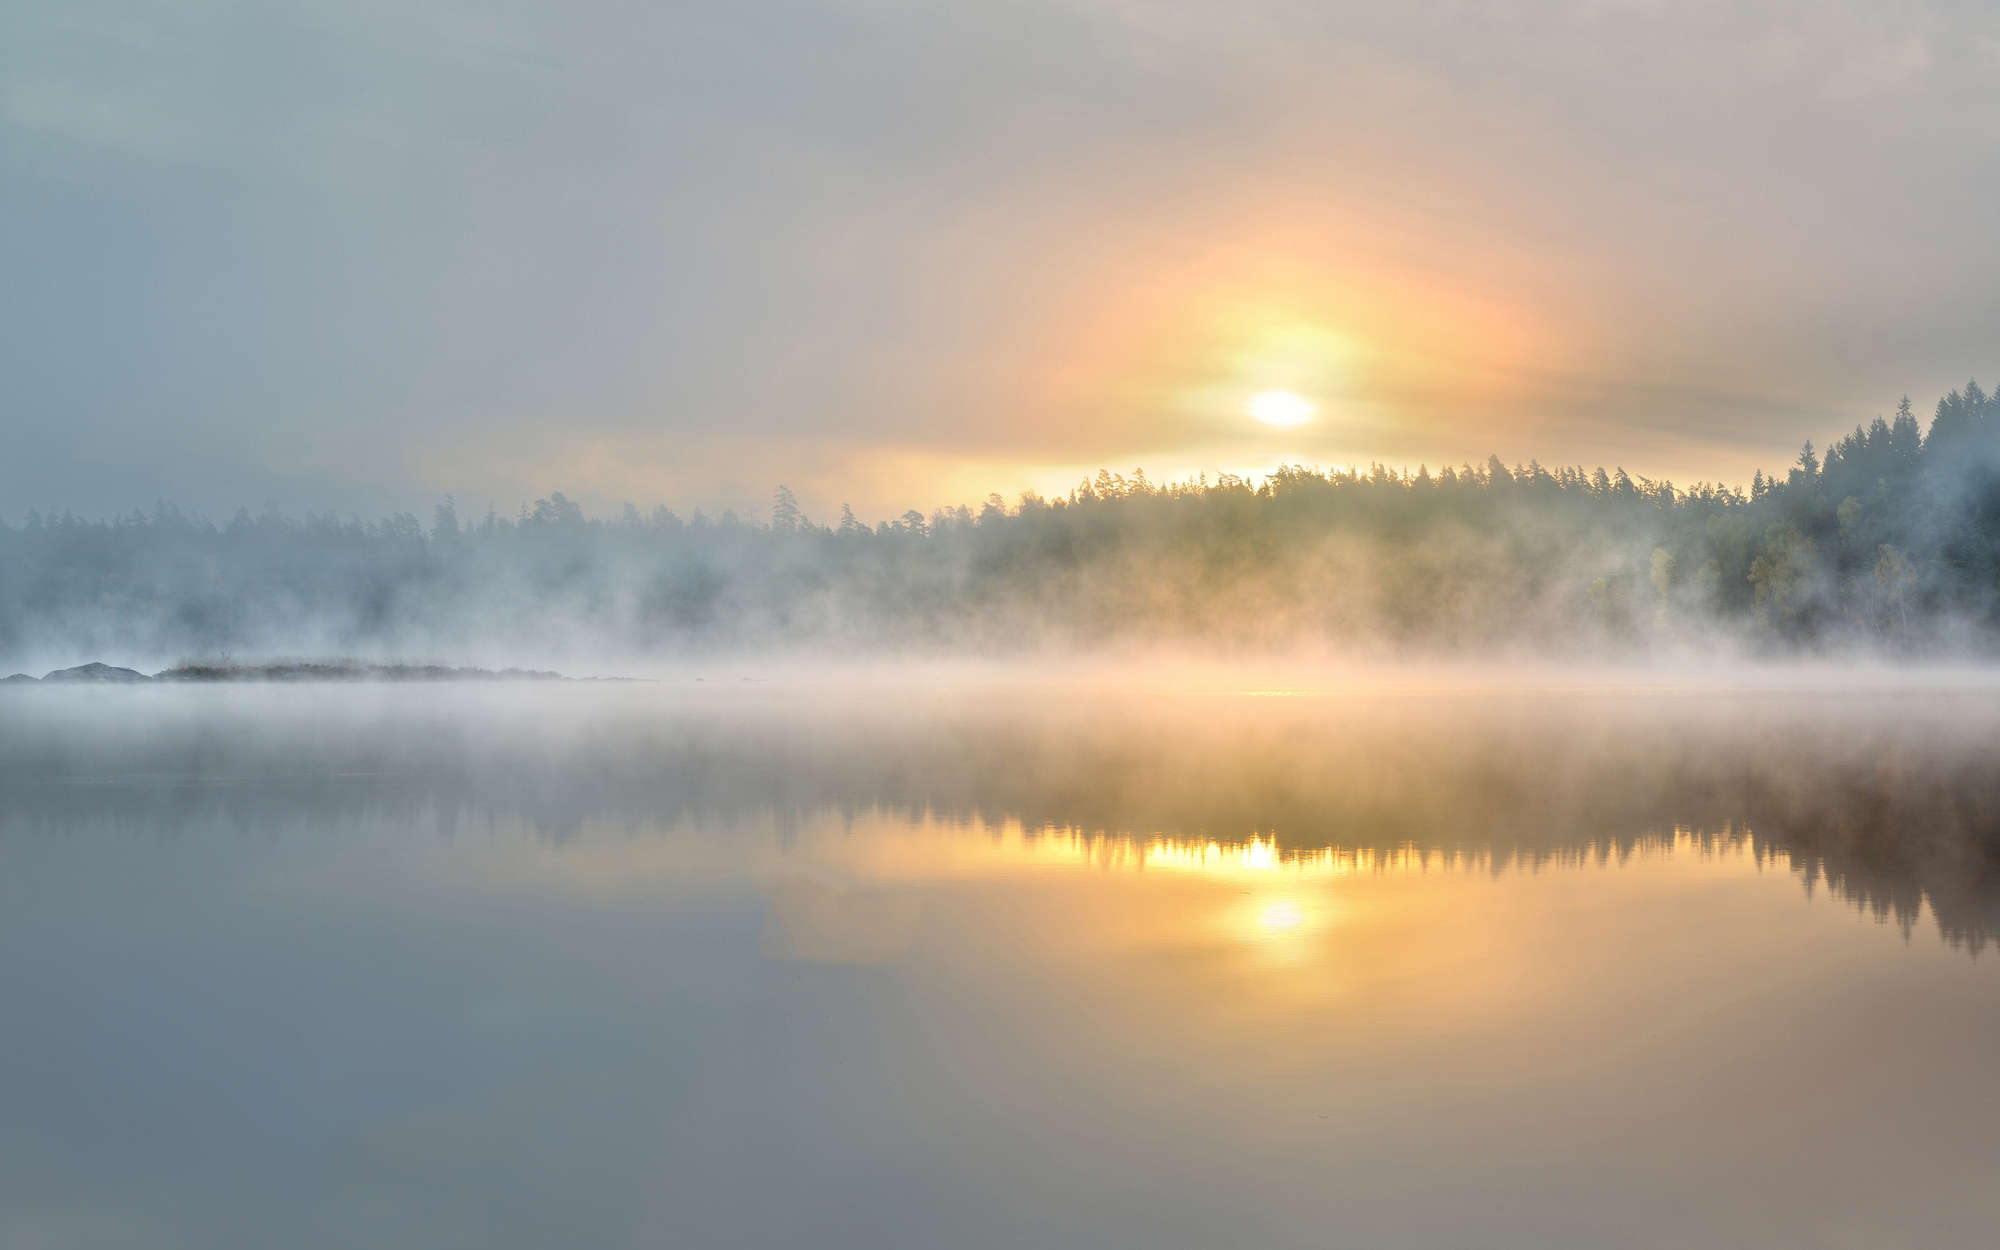             Nature mural foggy lake on premium smooth fleece
        